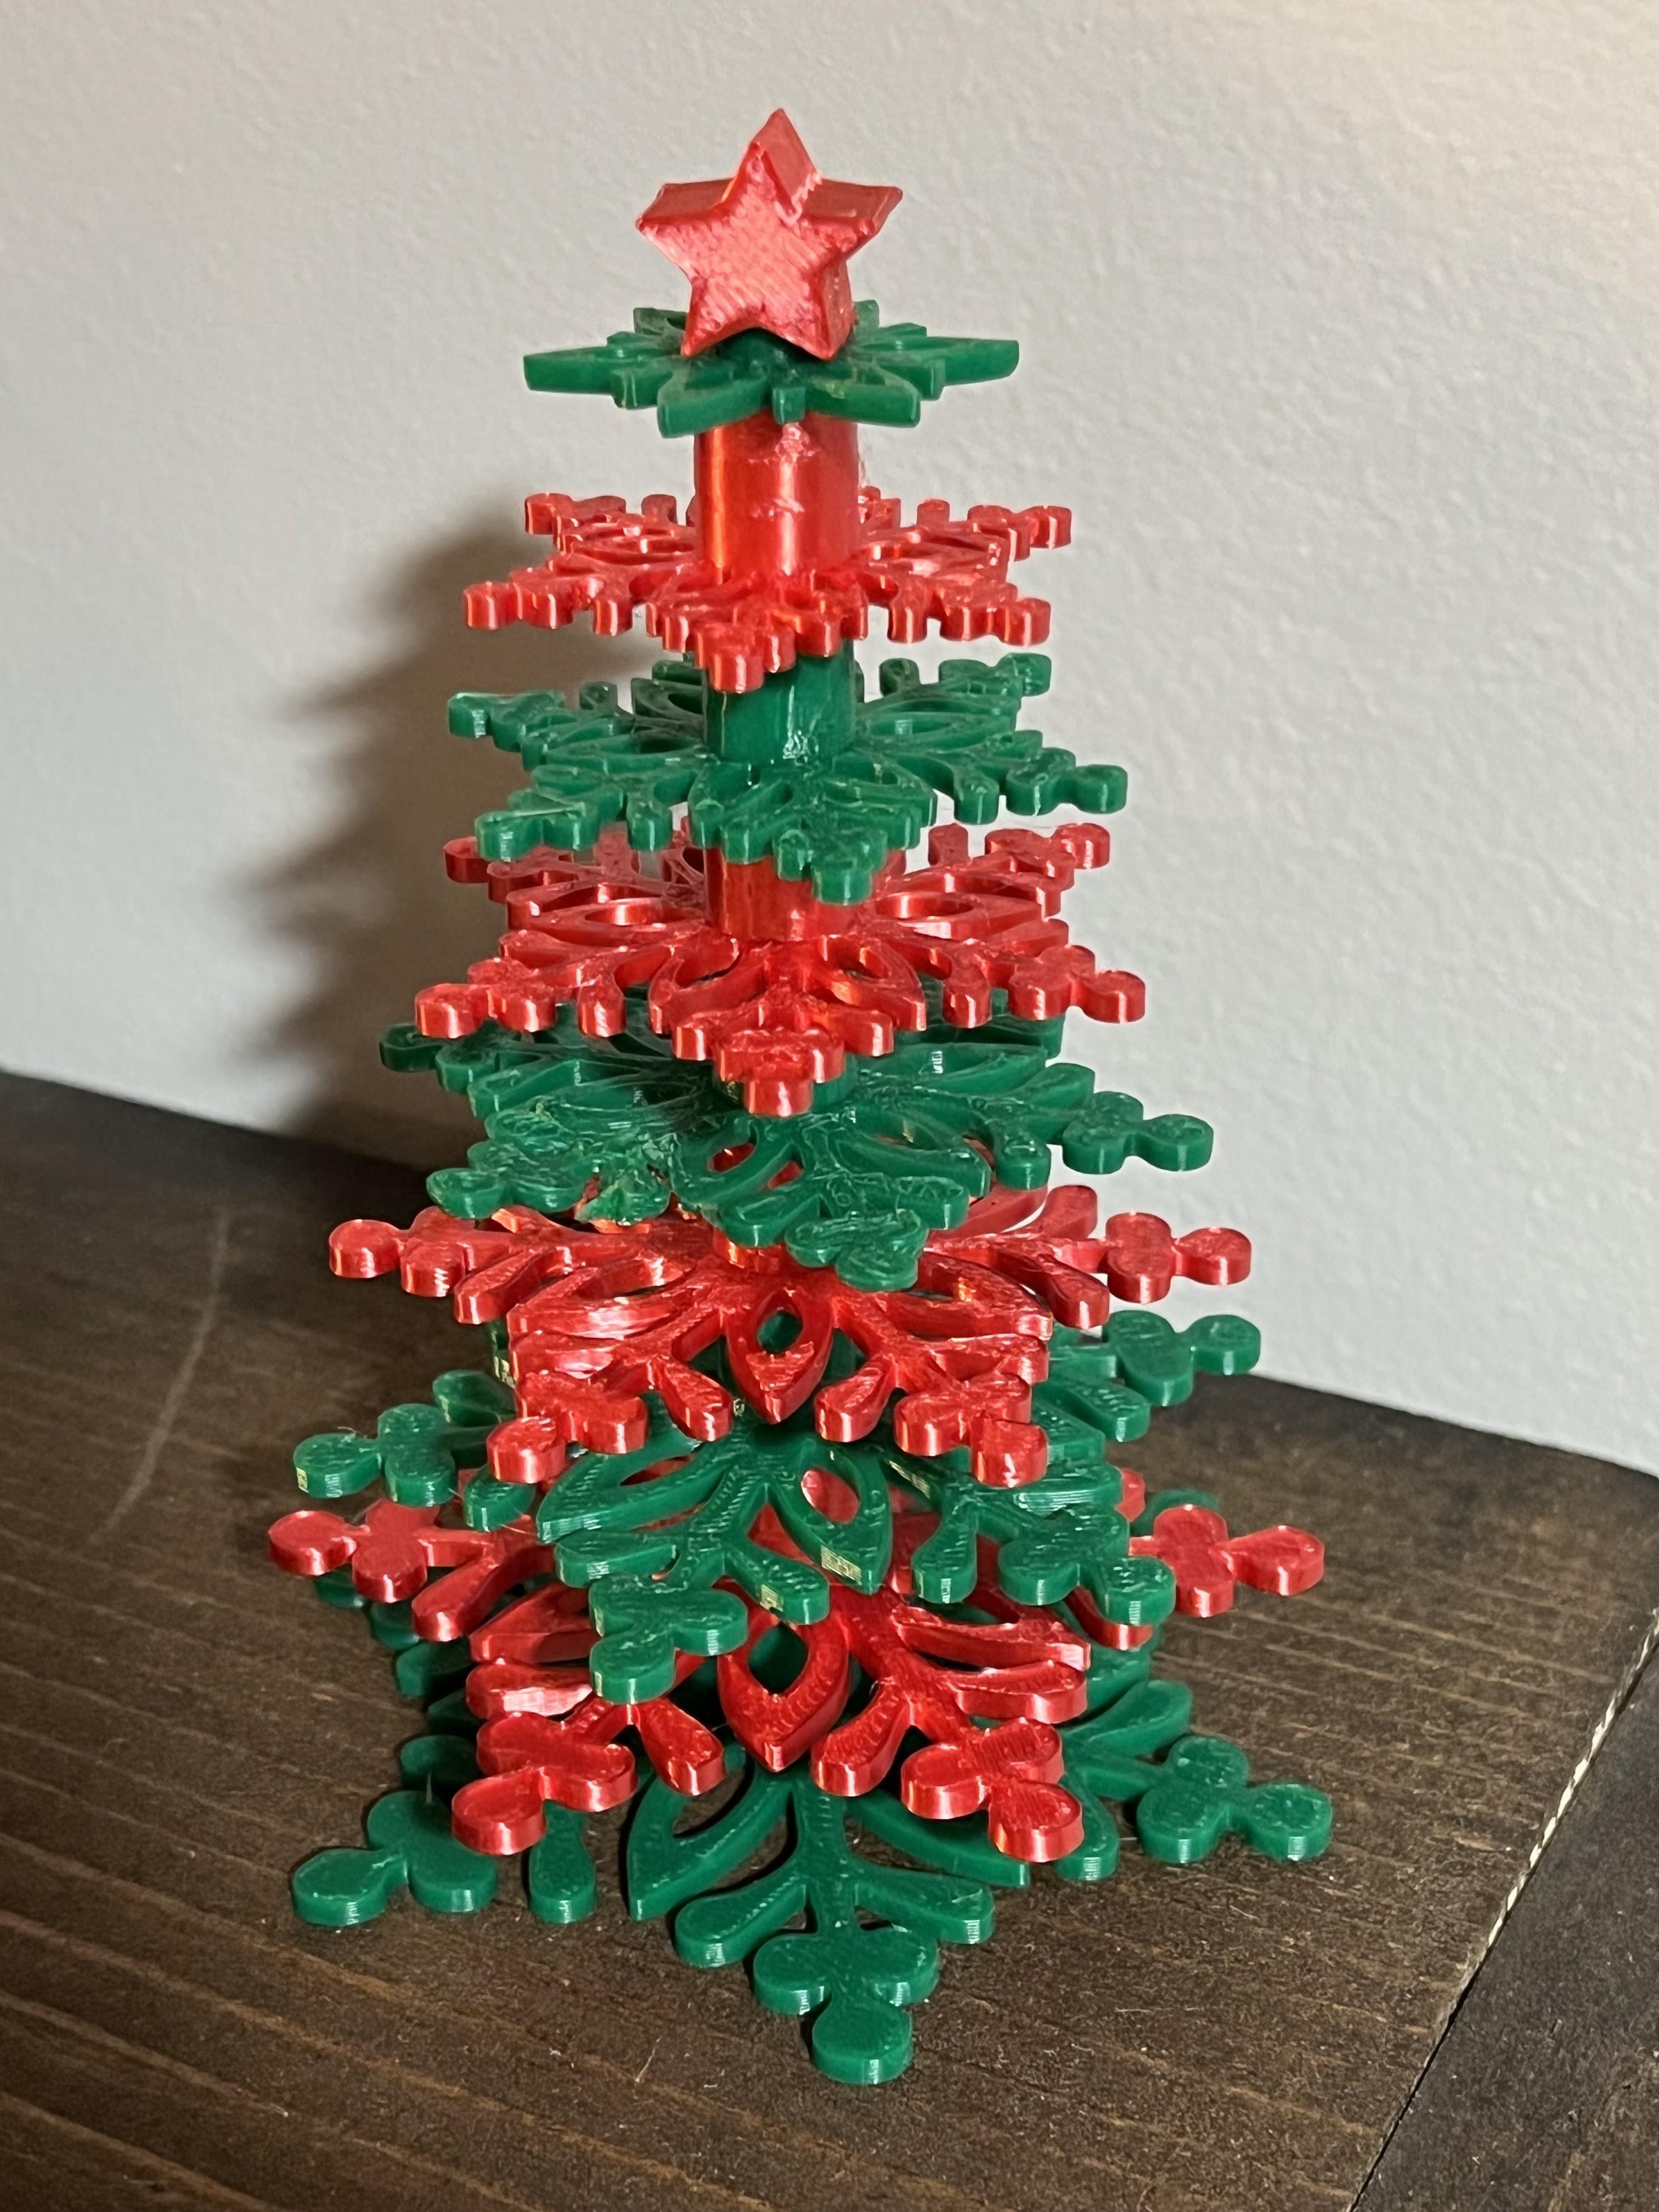 Snowflake Tree Christmas Ornament 3d model